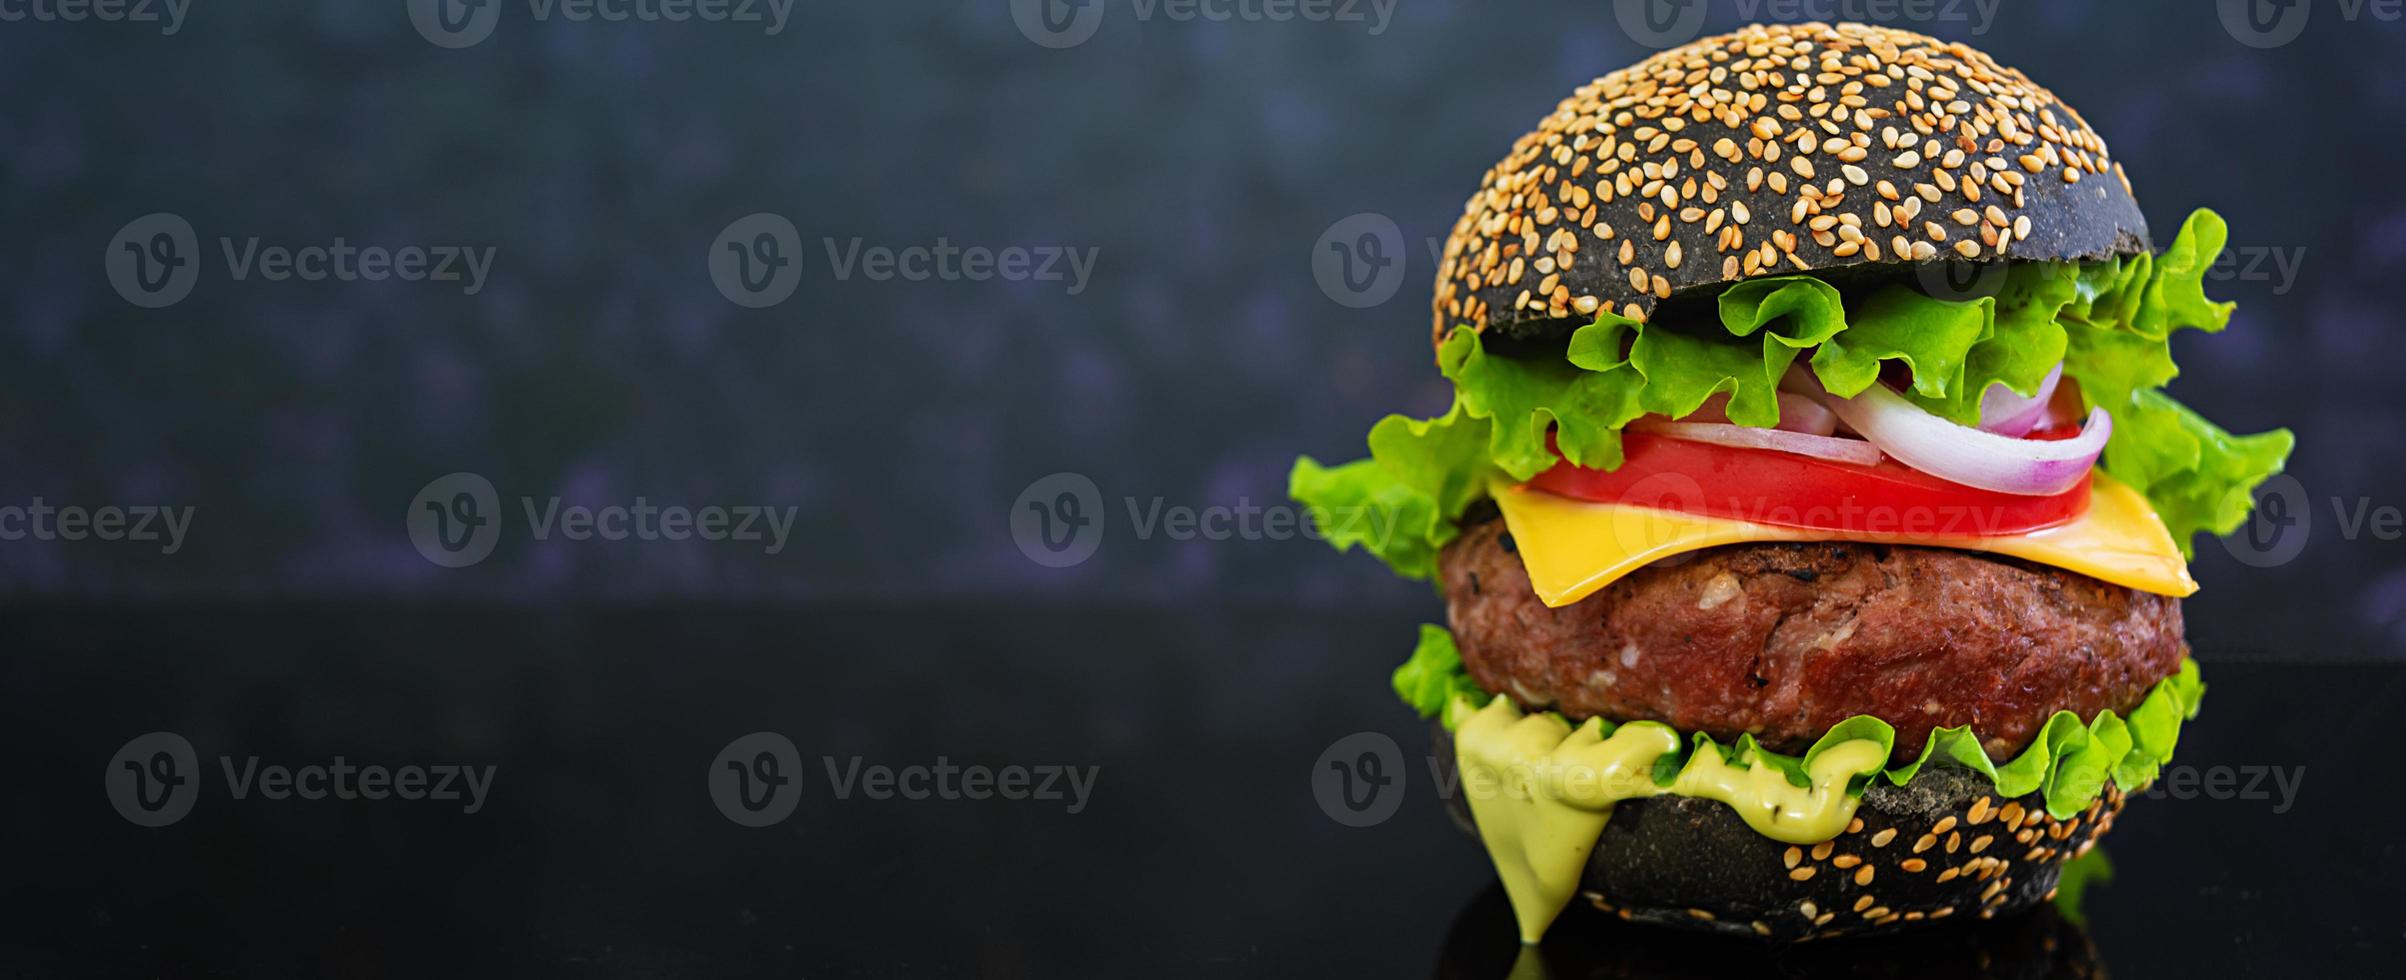 deliciosa hamburguesa hecha a mano sobre fondo oscuro. bandera. foto